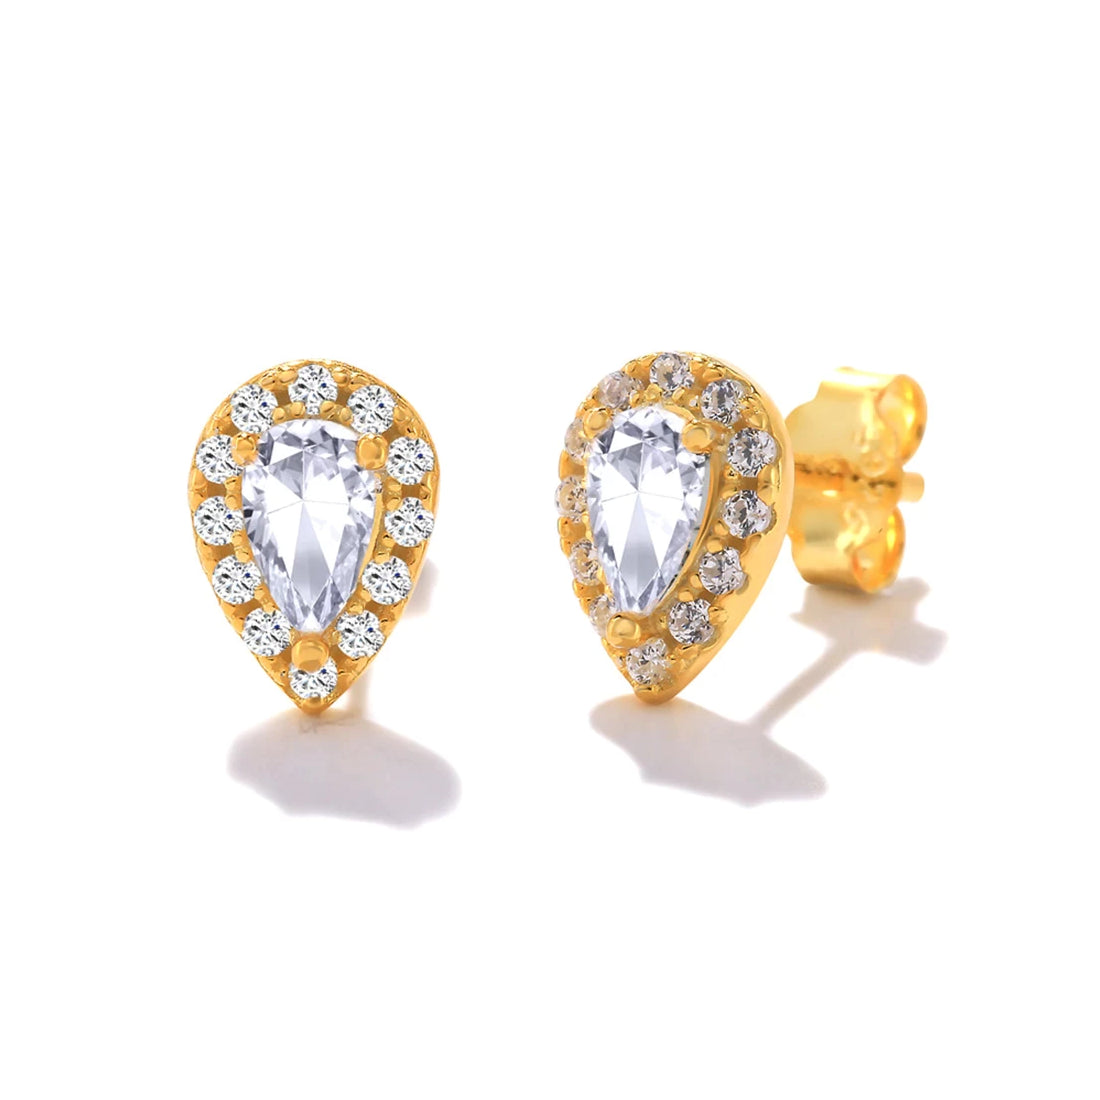 Malio Ohrstecker Ohrringe Ring Yasemen Store Schmuck Accessoires Stainless Steel Edelstahl 18K Vergoldet Gold jewel jewelry earrings